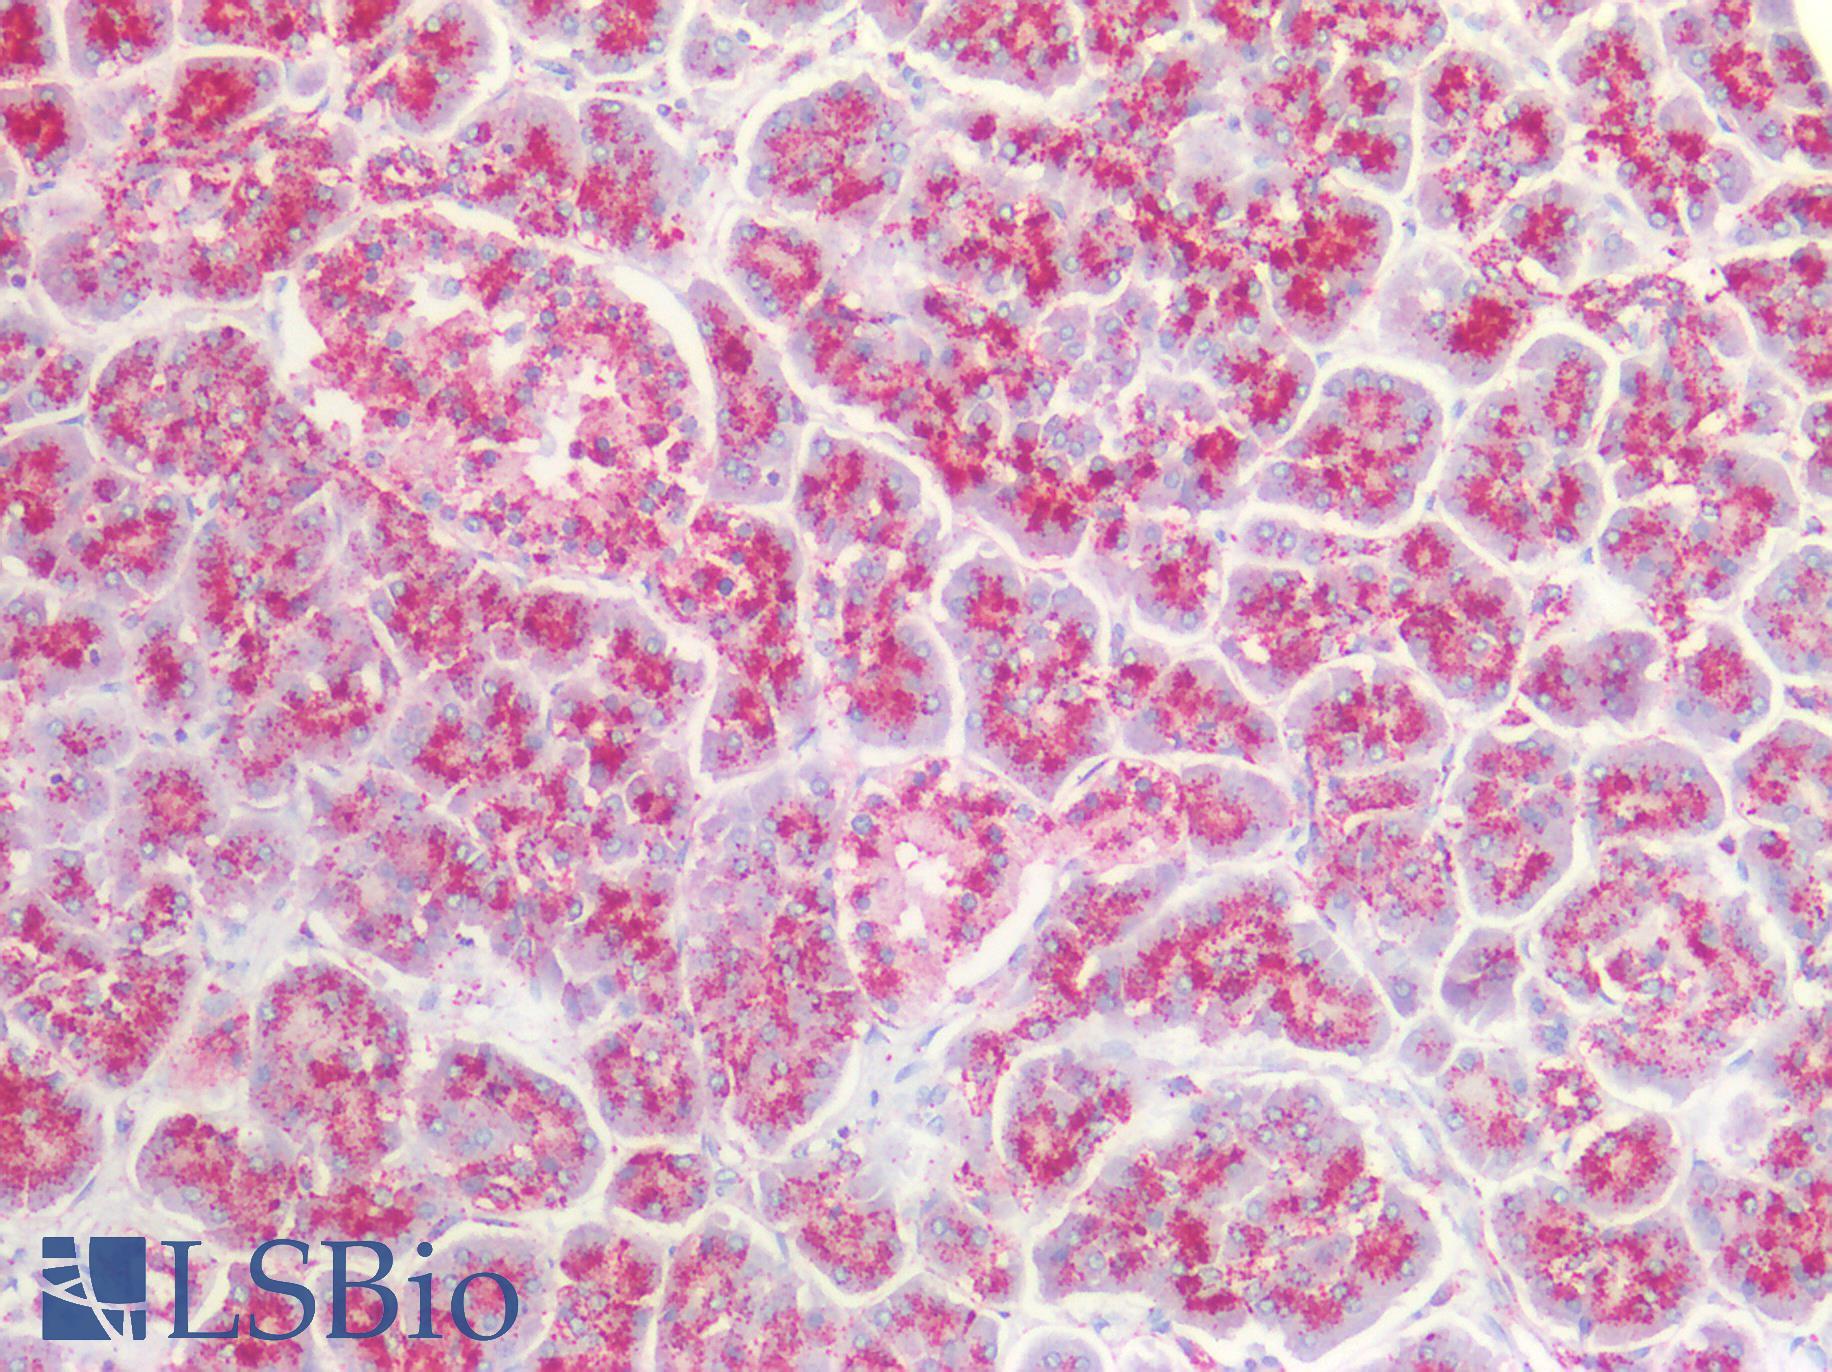 CTSD / Cathepsin D Antibody - Human Pancreas: Formalin-Fixed, Paraffin-Embedded (FFPE)